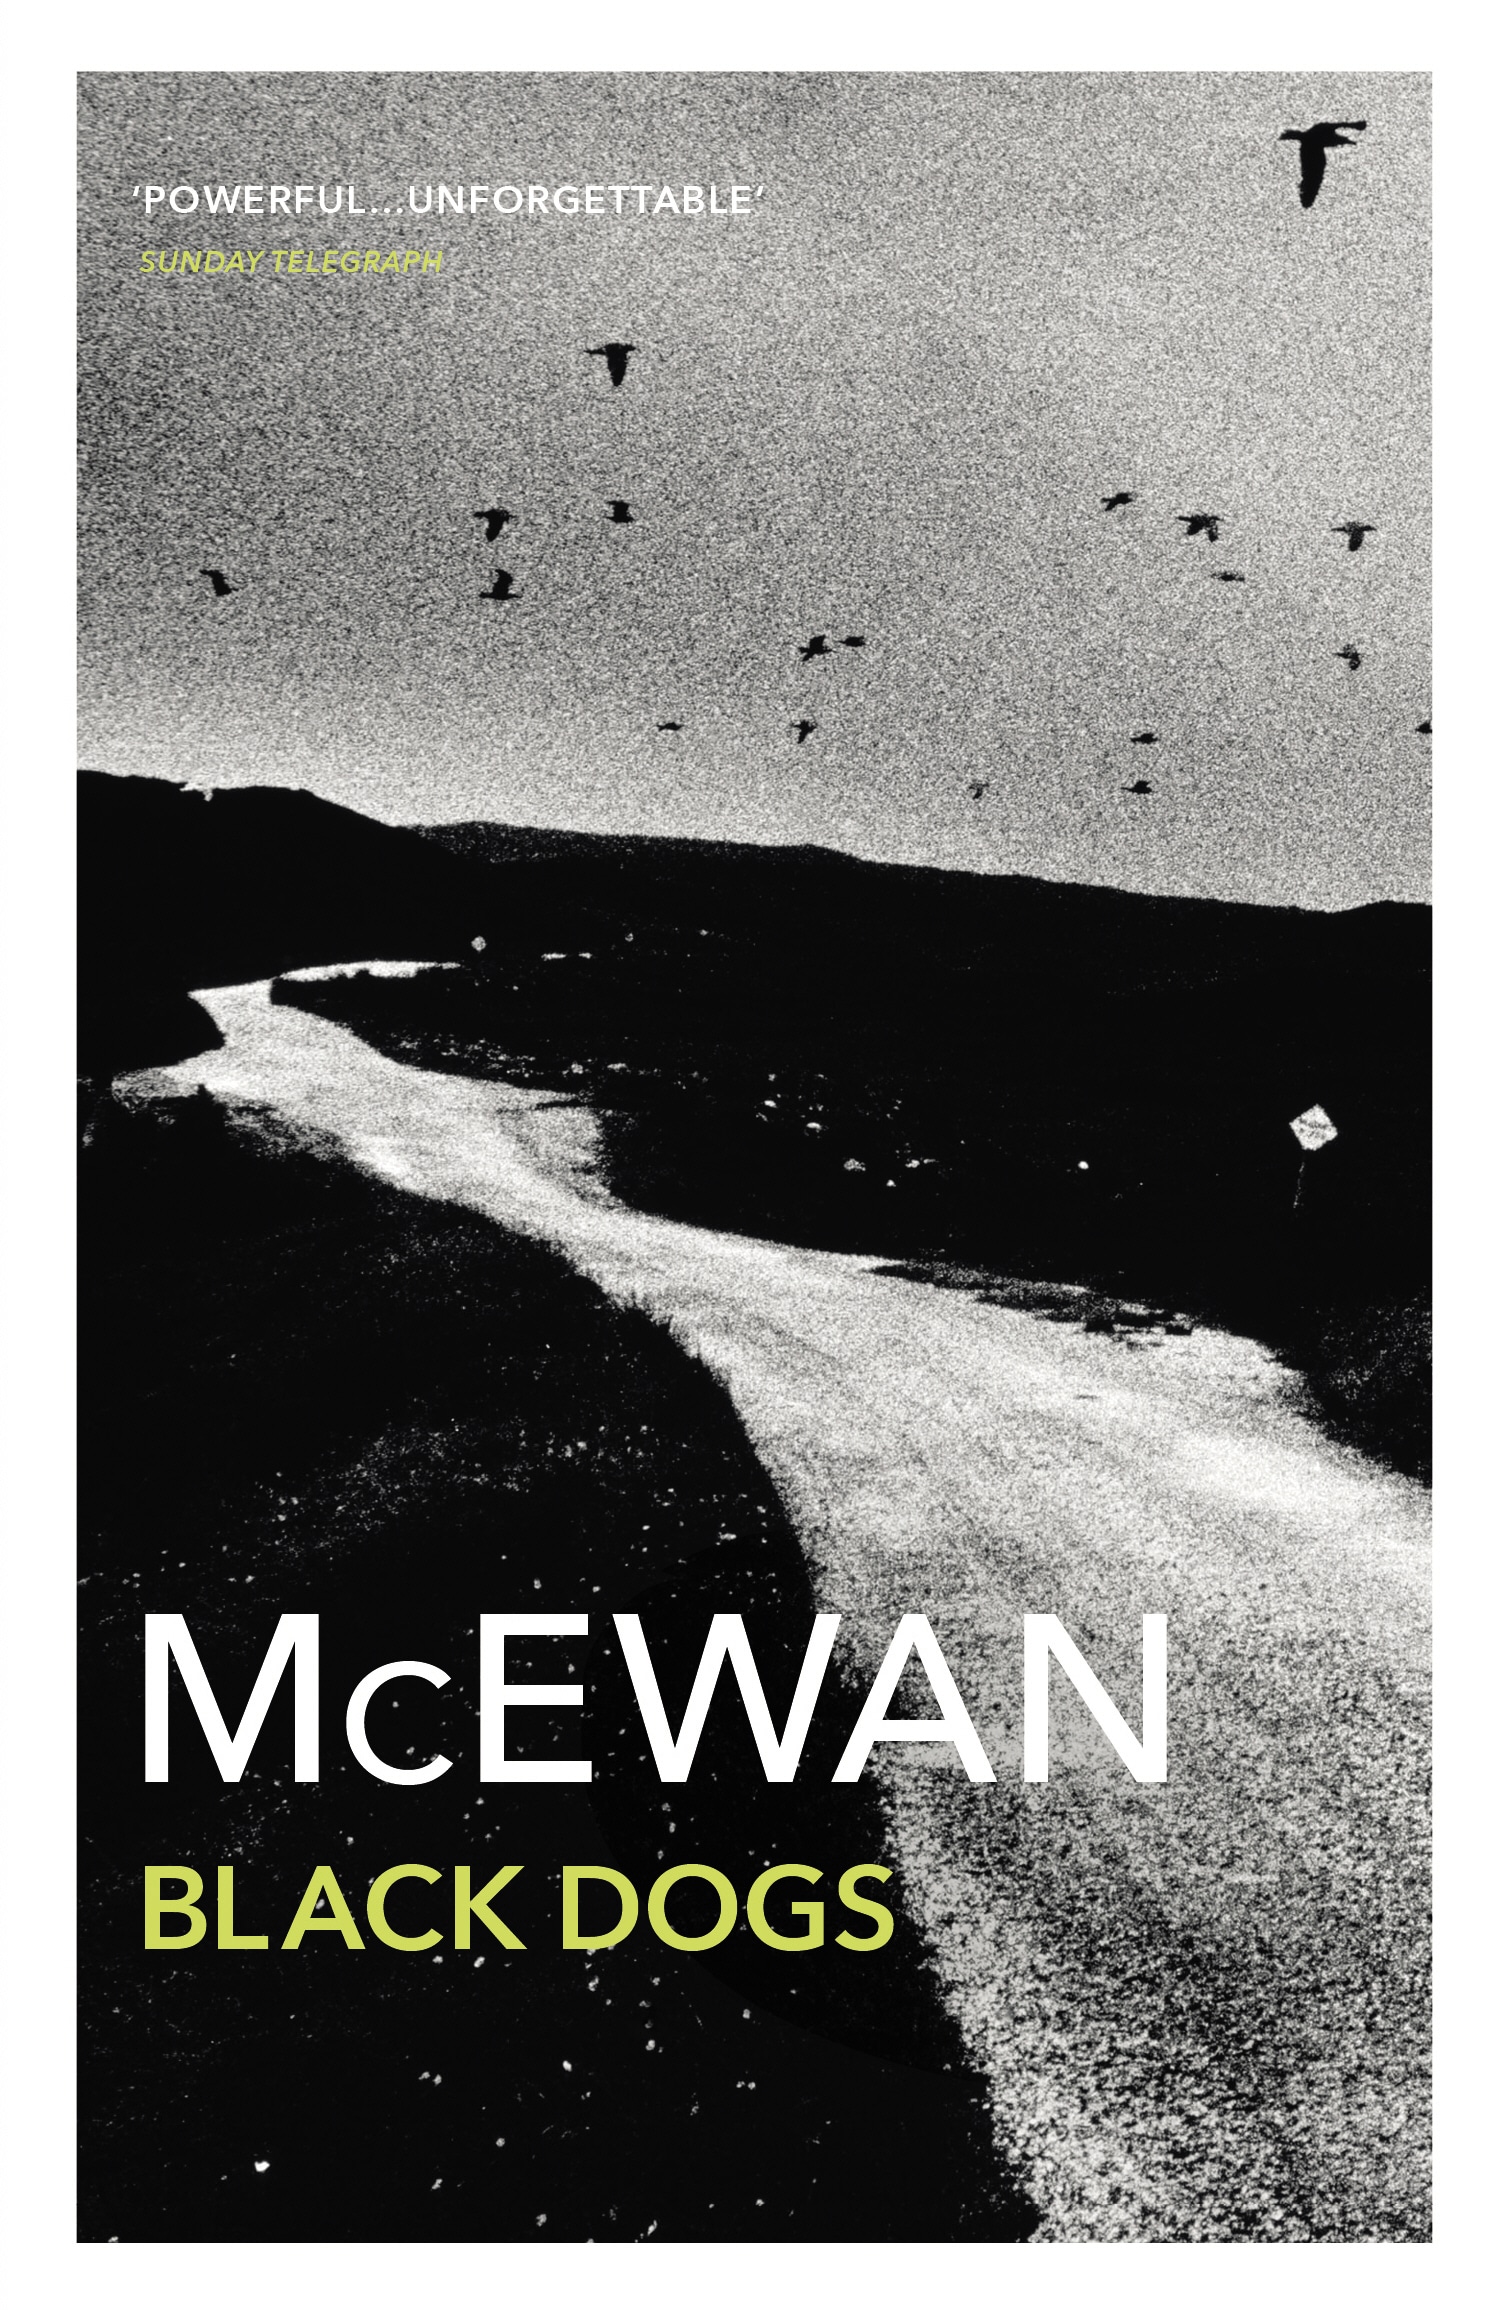 Book “Black Dogs” by Ian McEwan — September 3, 1998